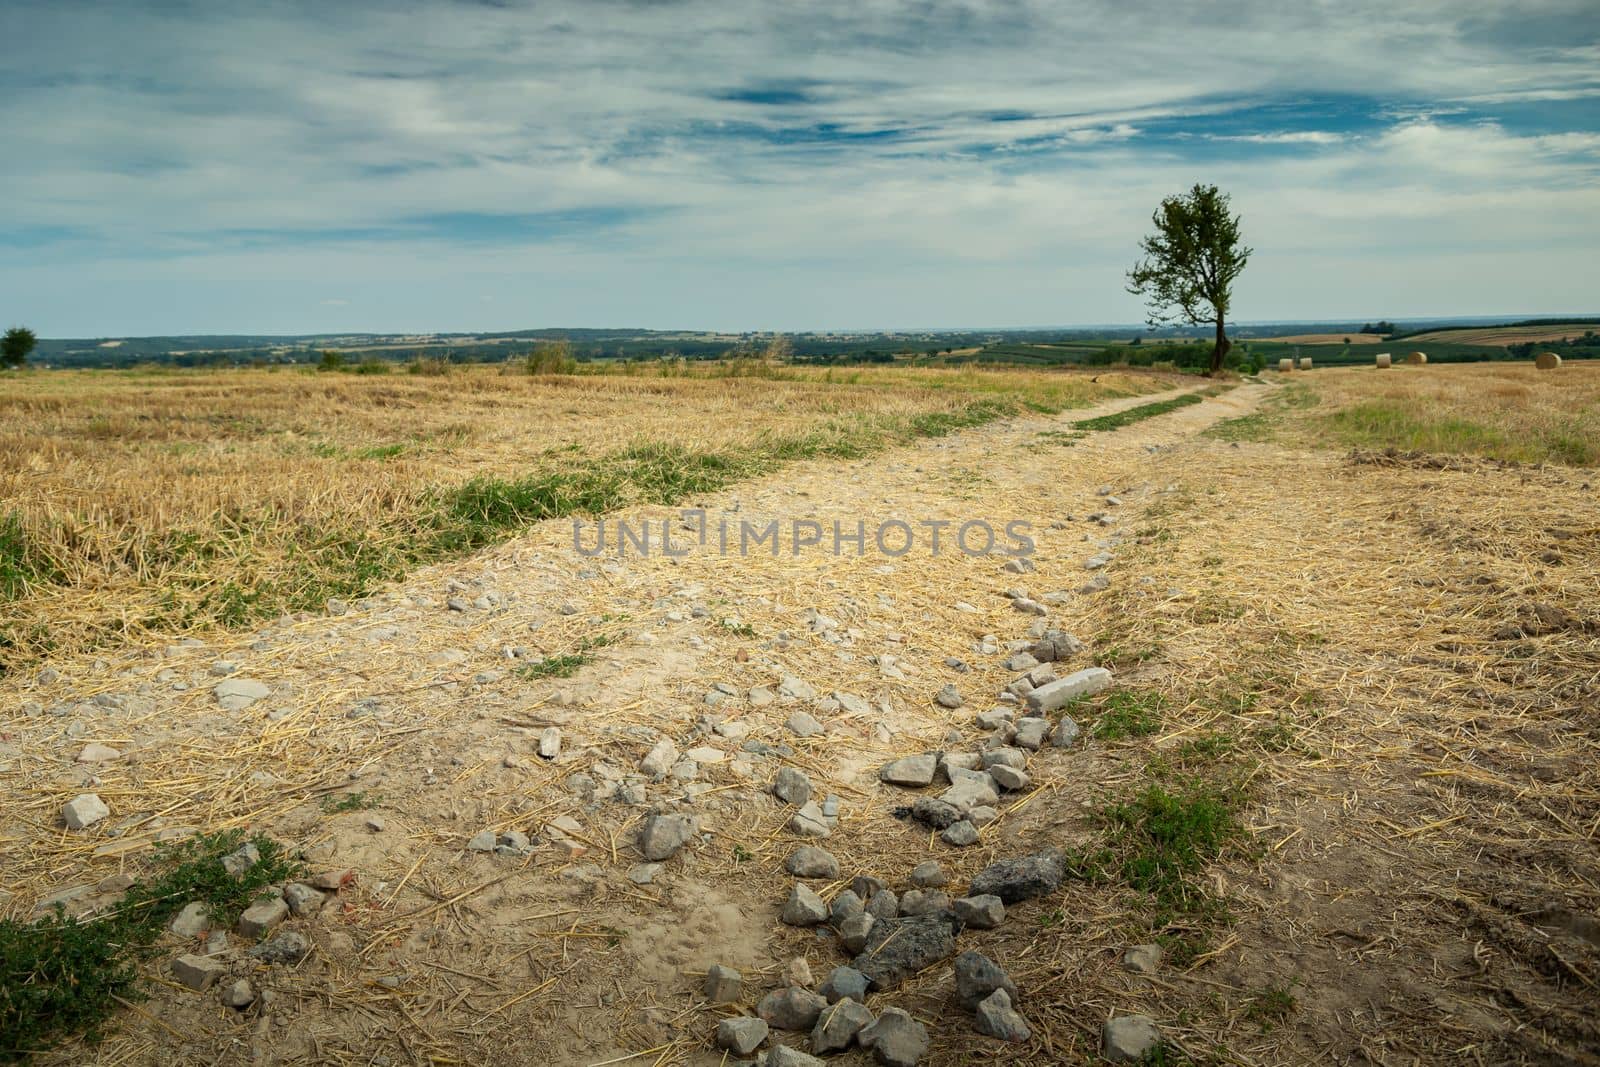 Stones on a dirt road through the fields, Ostrzyca, Poland